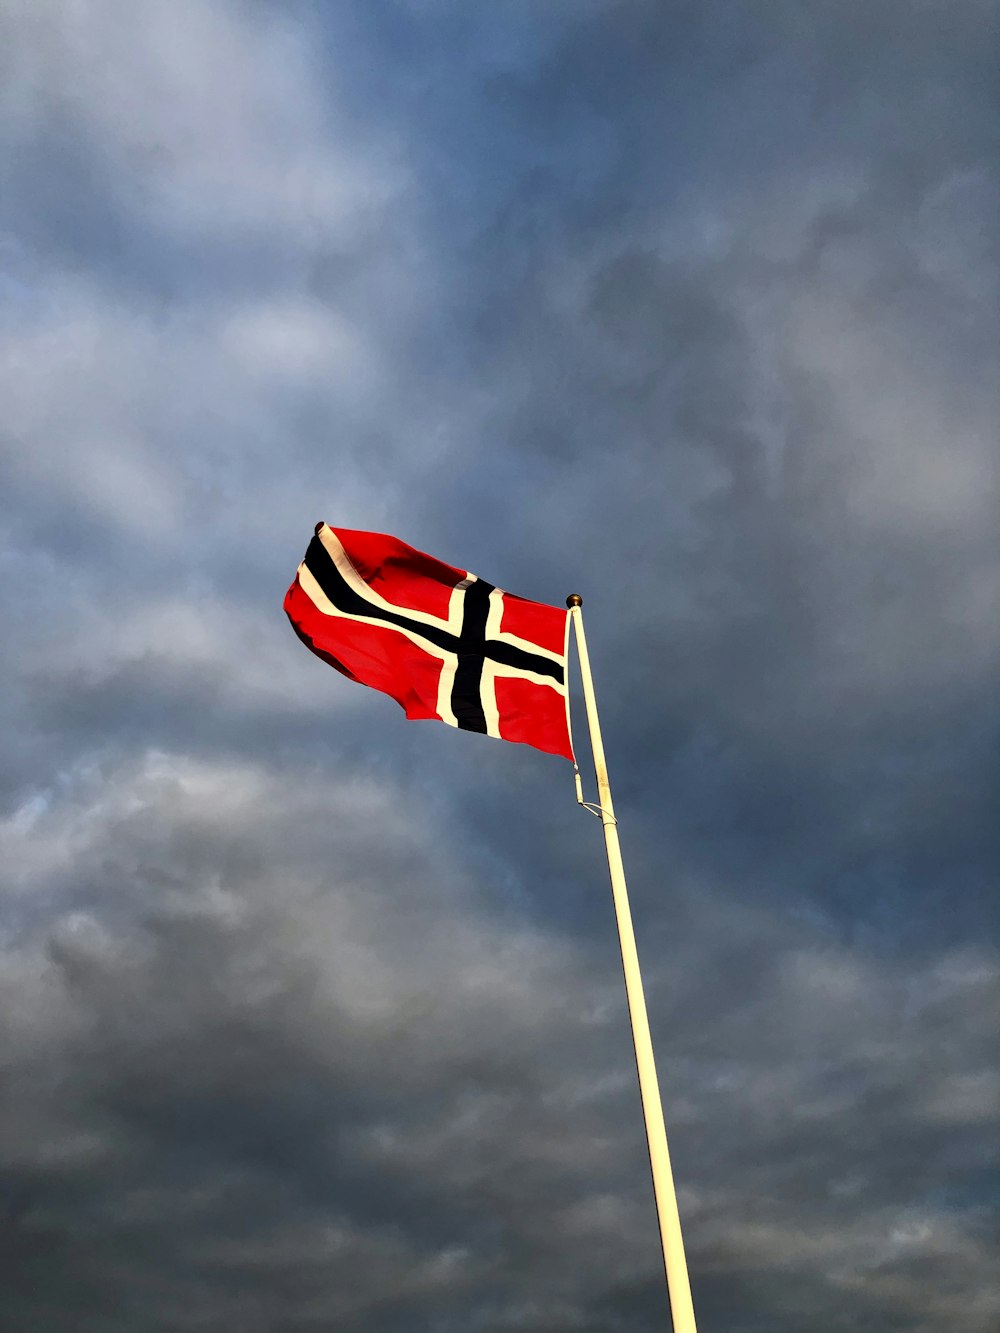 red and black flag photo – Free Sweden Image on Unsplash